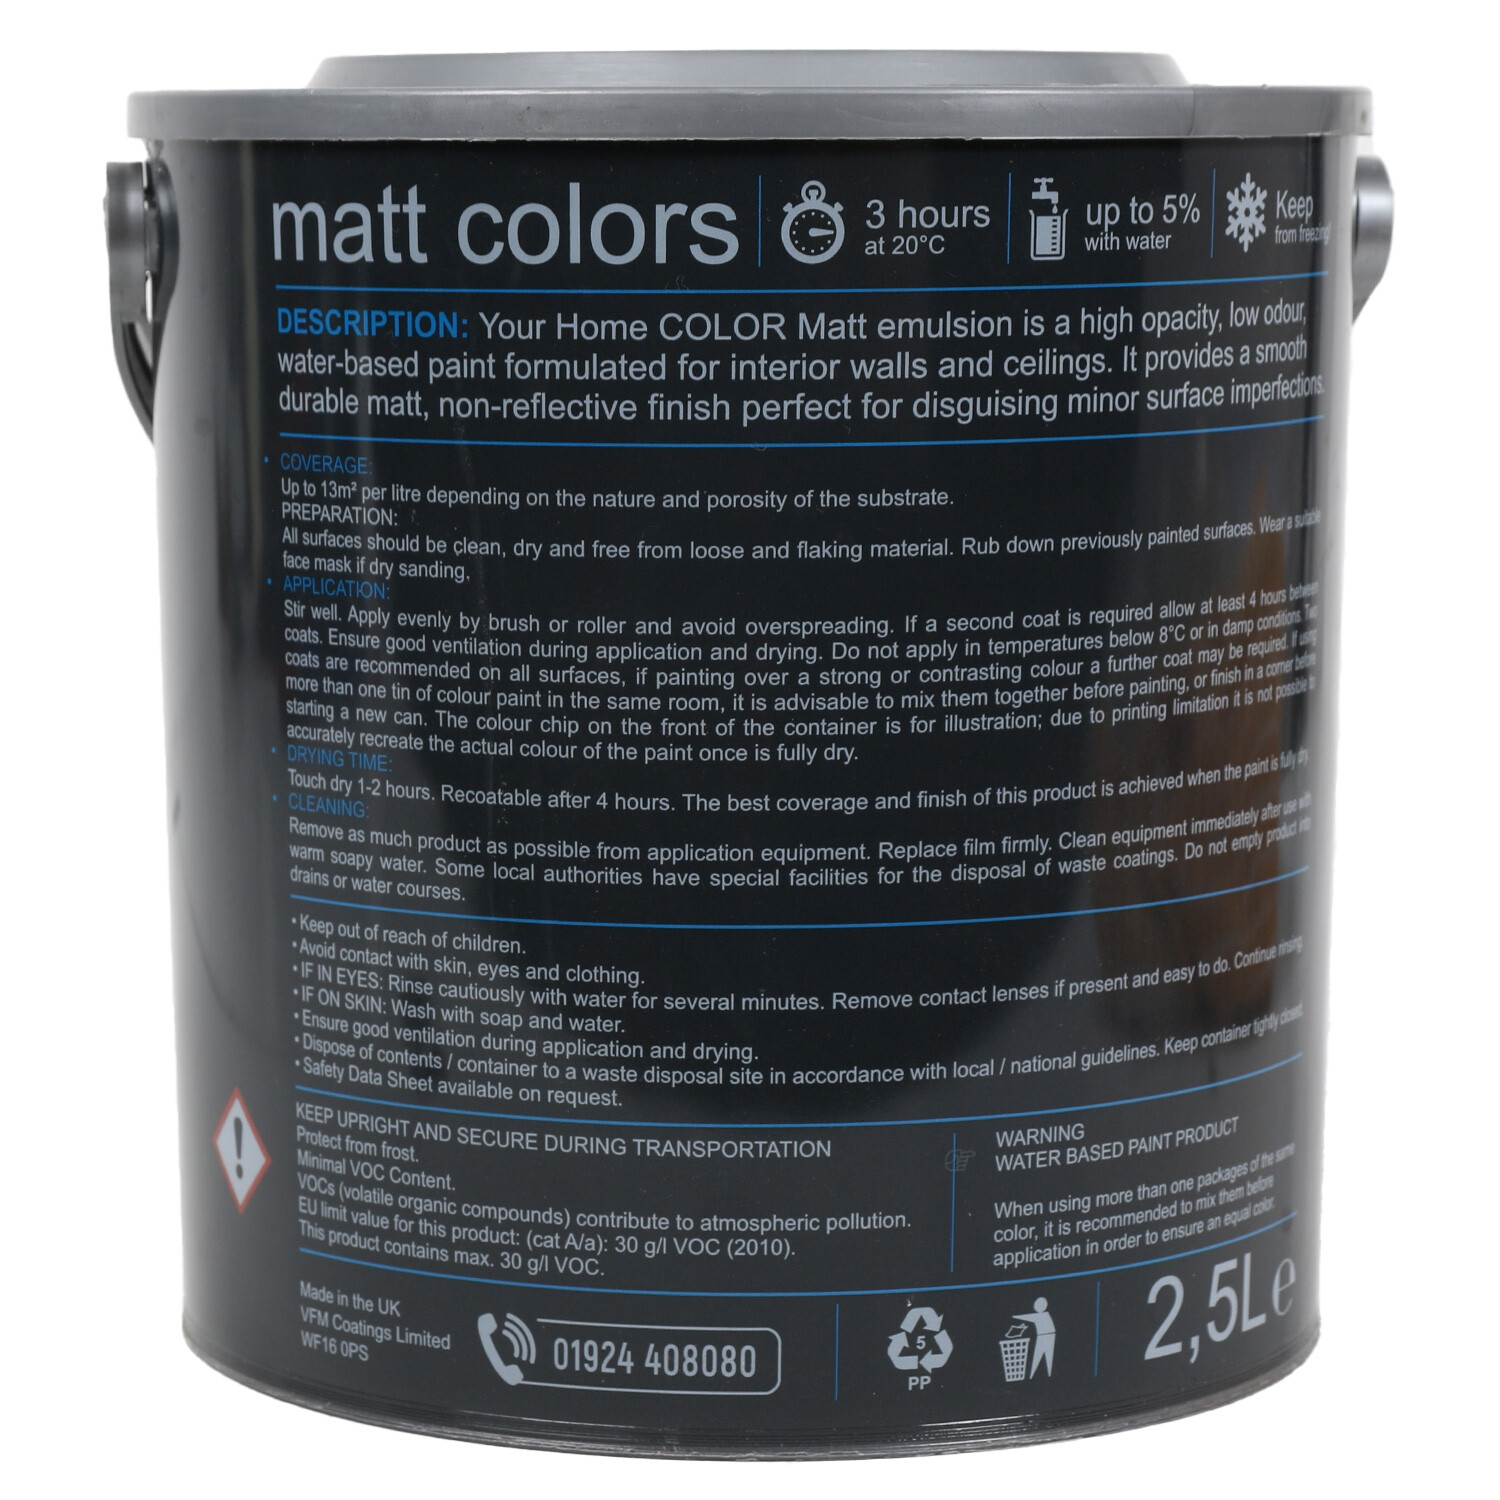 Your Home Walls & Ceilings Steel Grey Matt Emulsion Paint 2.5L Image 2